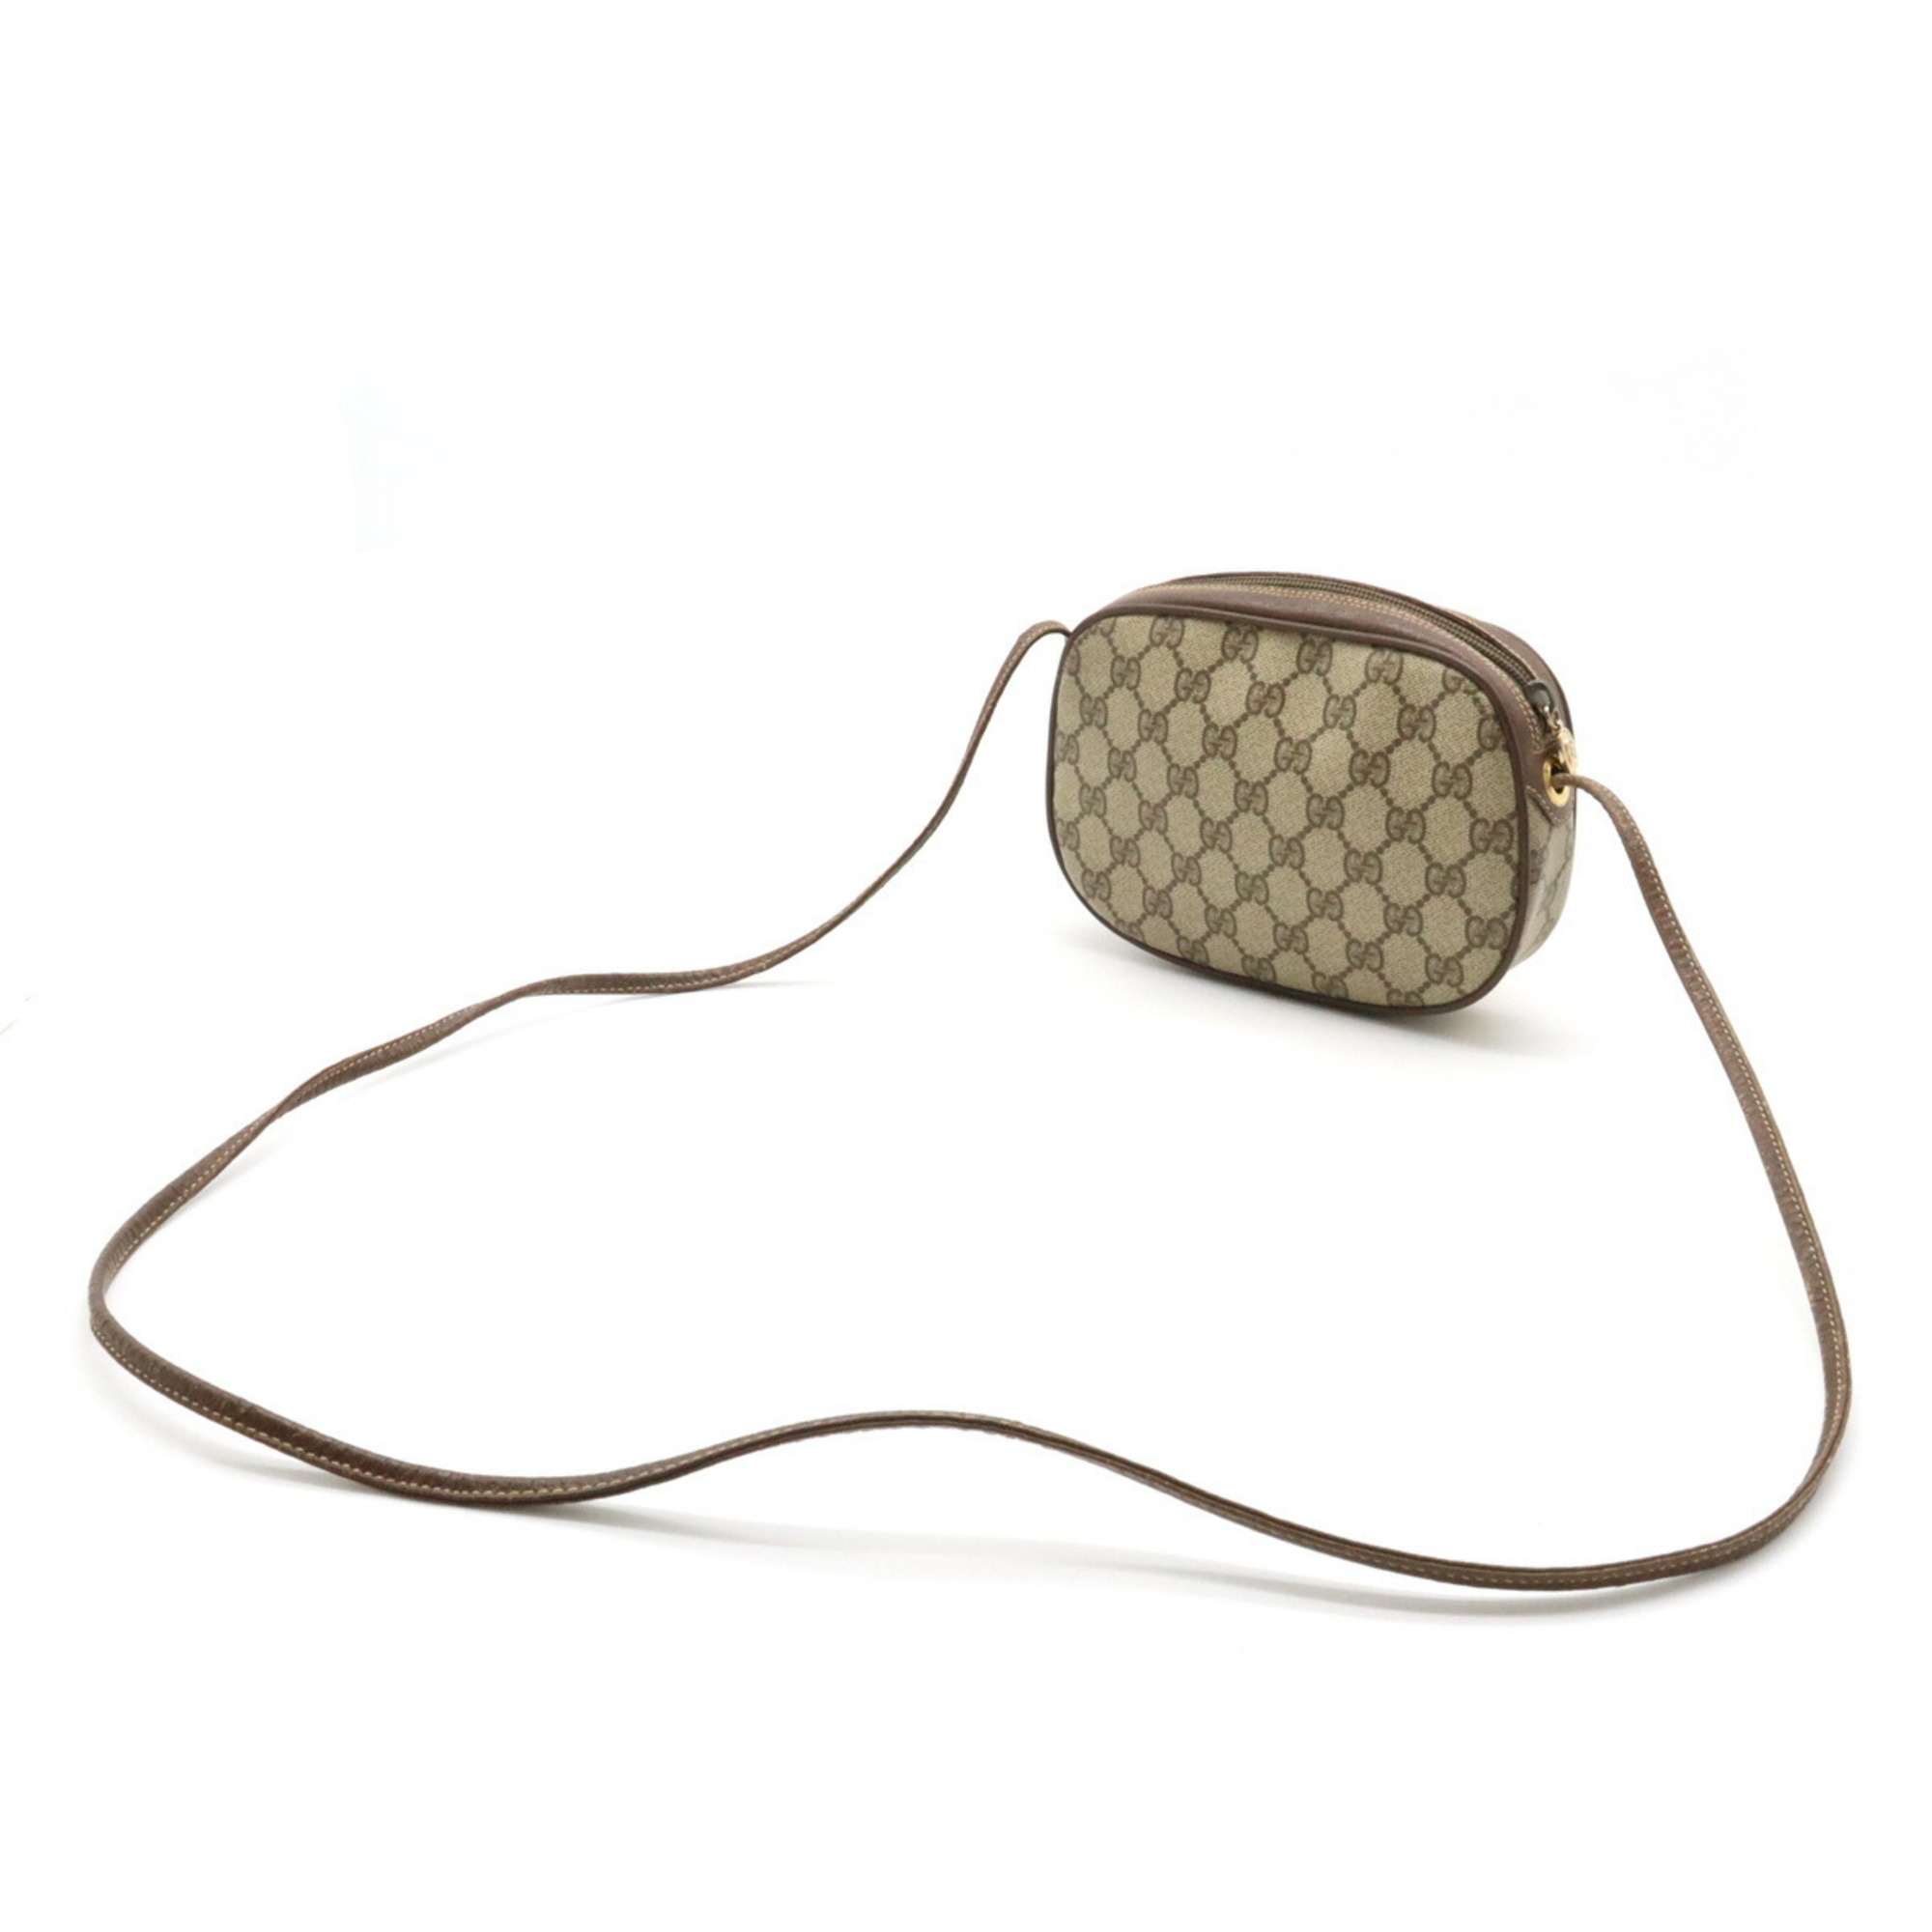 GUCCI Old Gucci GG Plus Sherry Line Shoulder Bag Pochette Khaki Beige Brown 007.754.6112